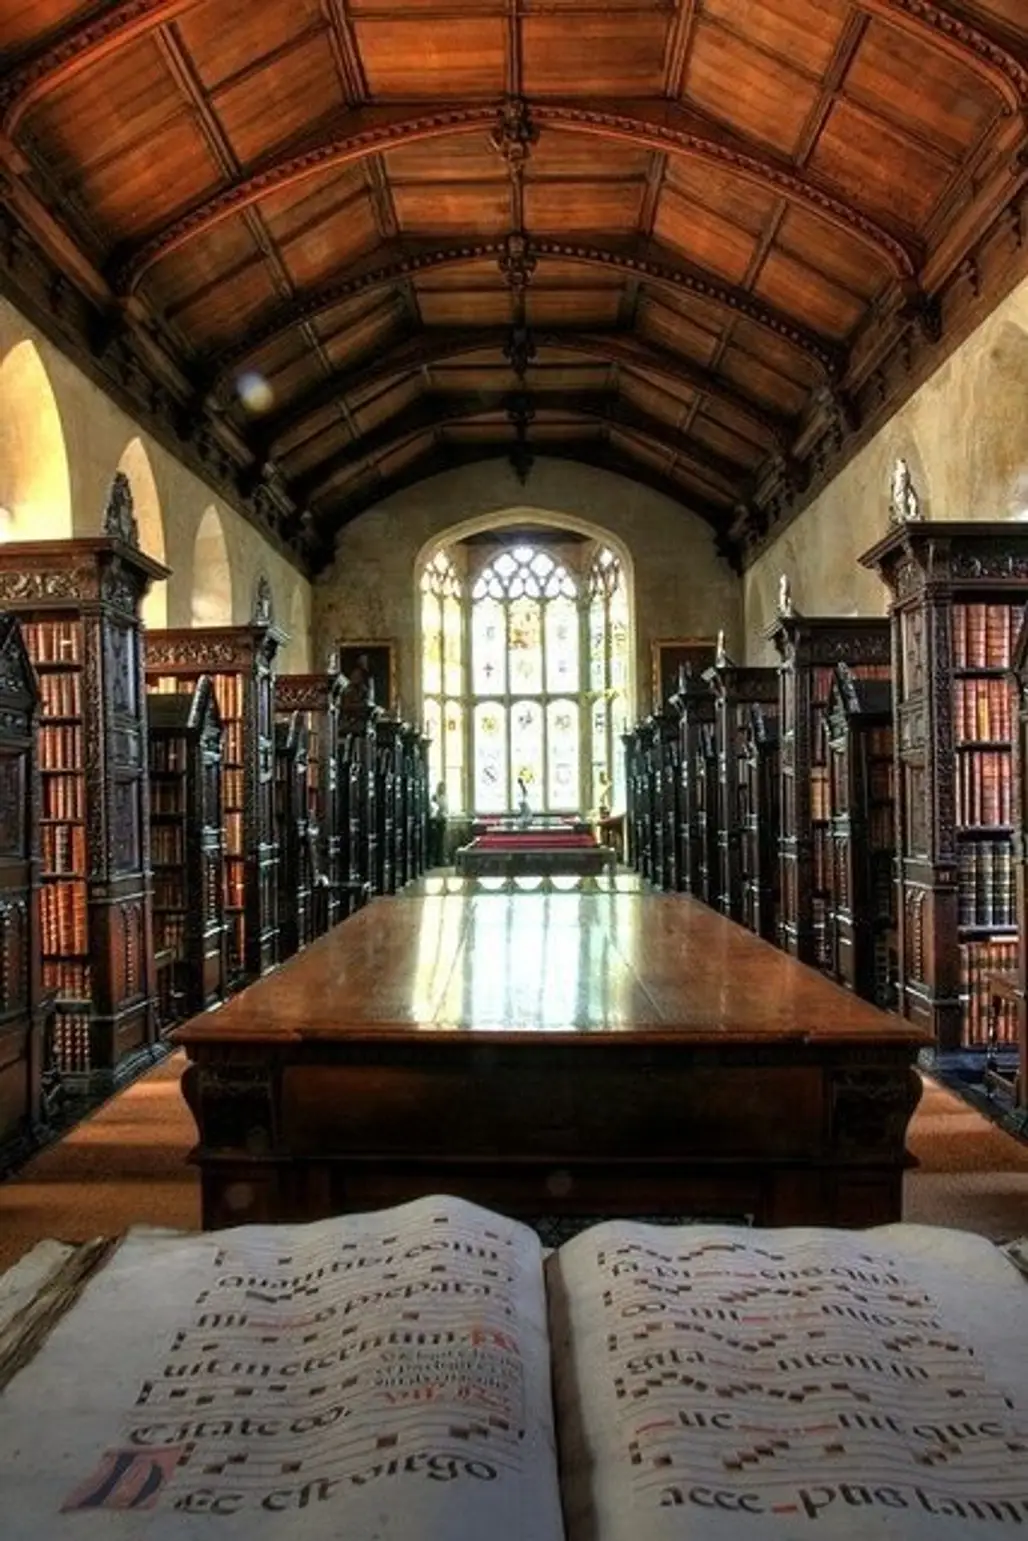 St. John’s College Old Library, Cambridge University—England